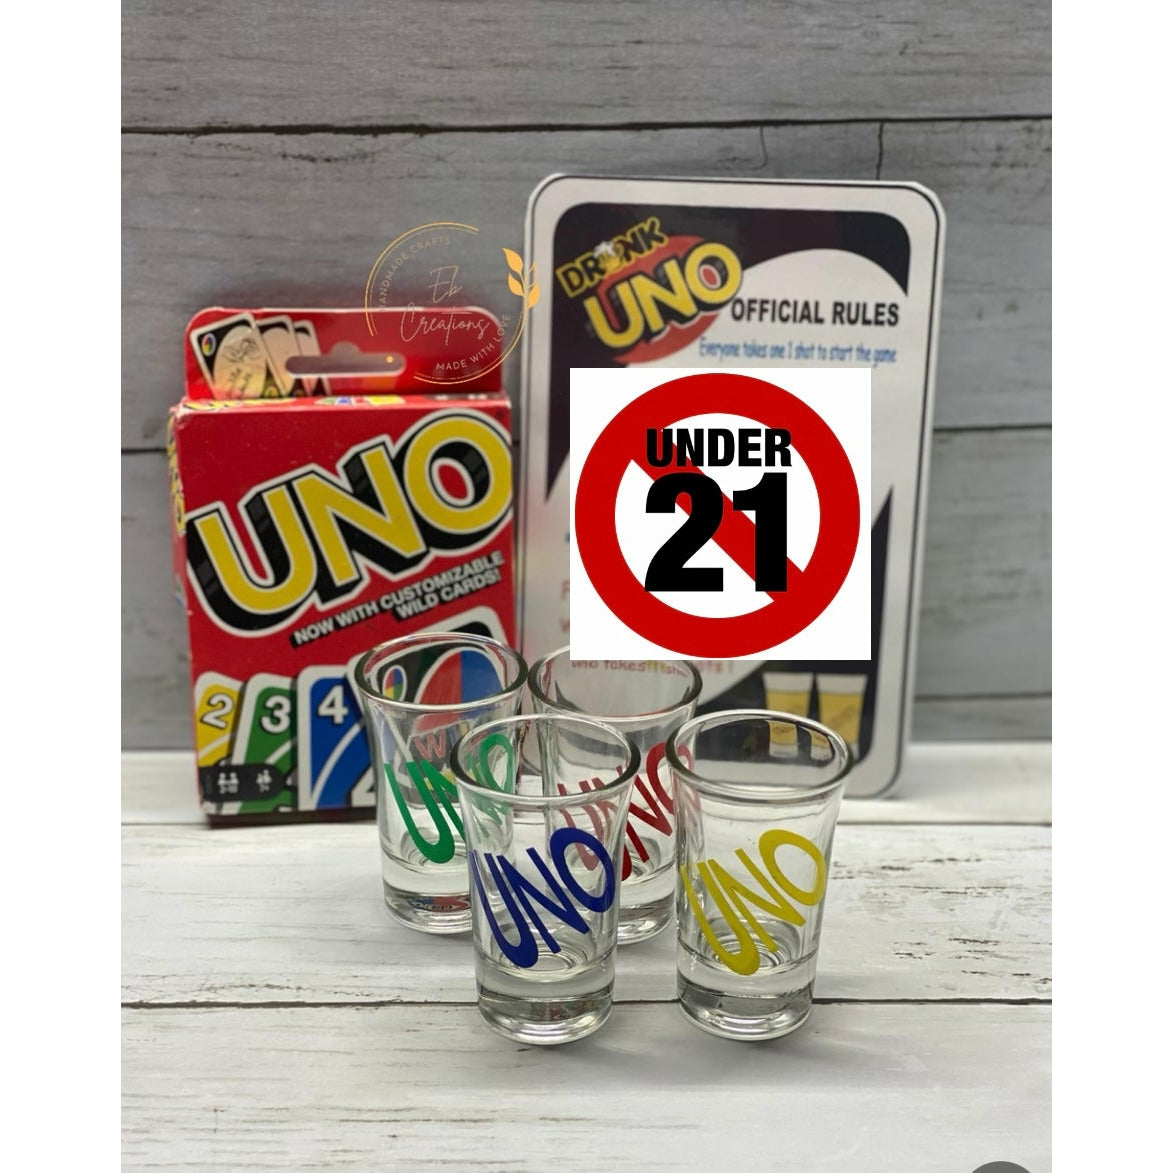 Drunk Uno Rule Card & Box/Shot Glass Design